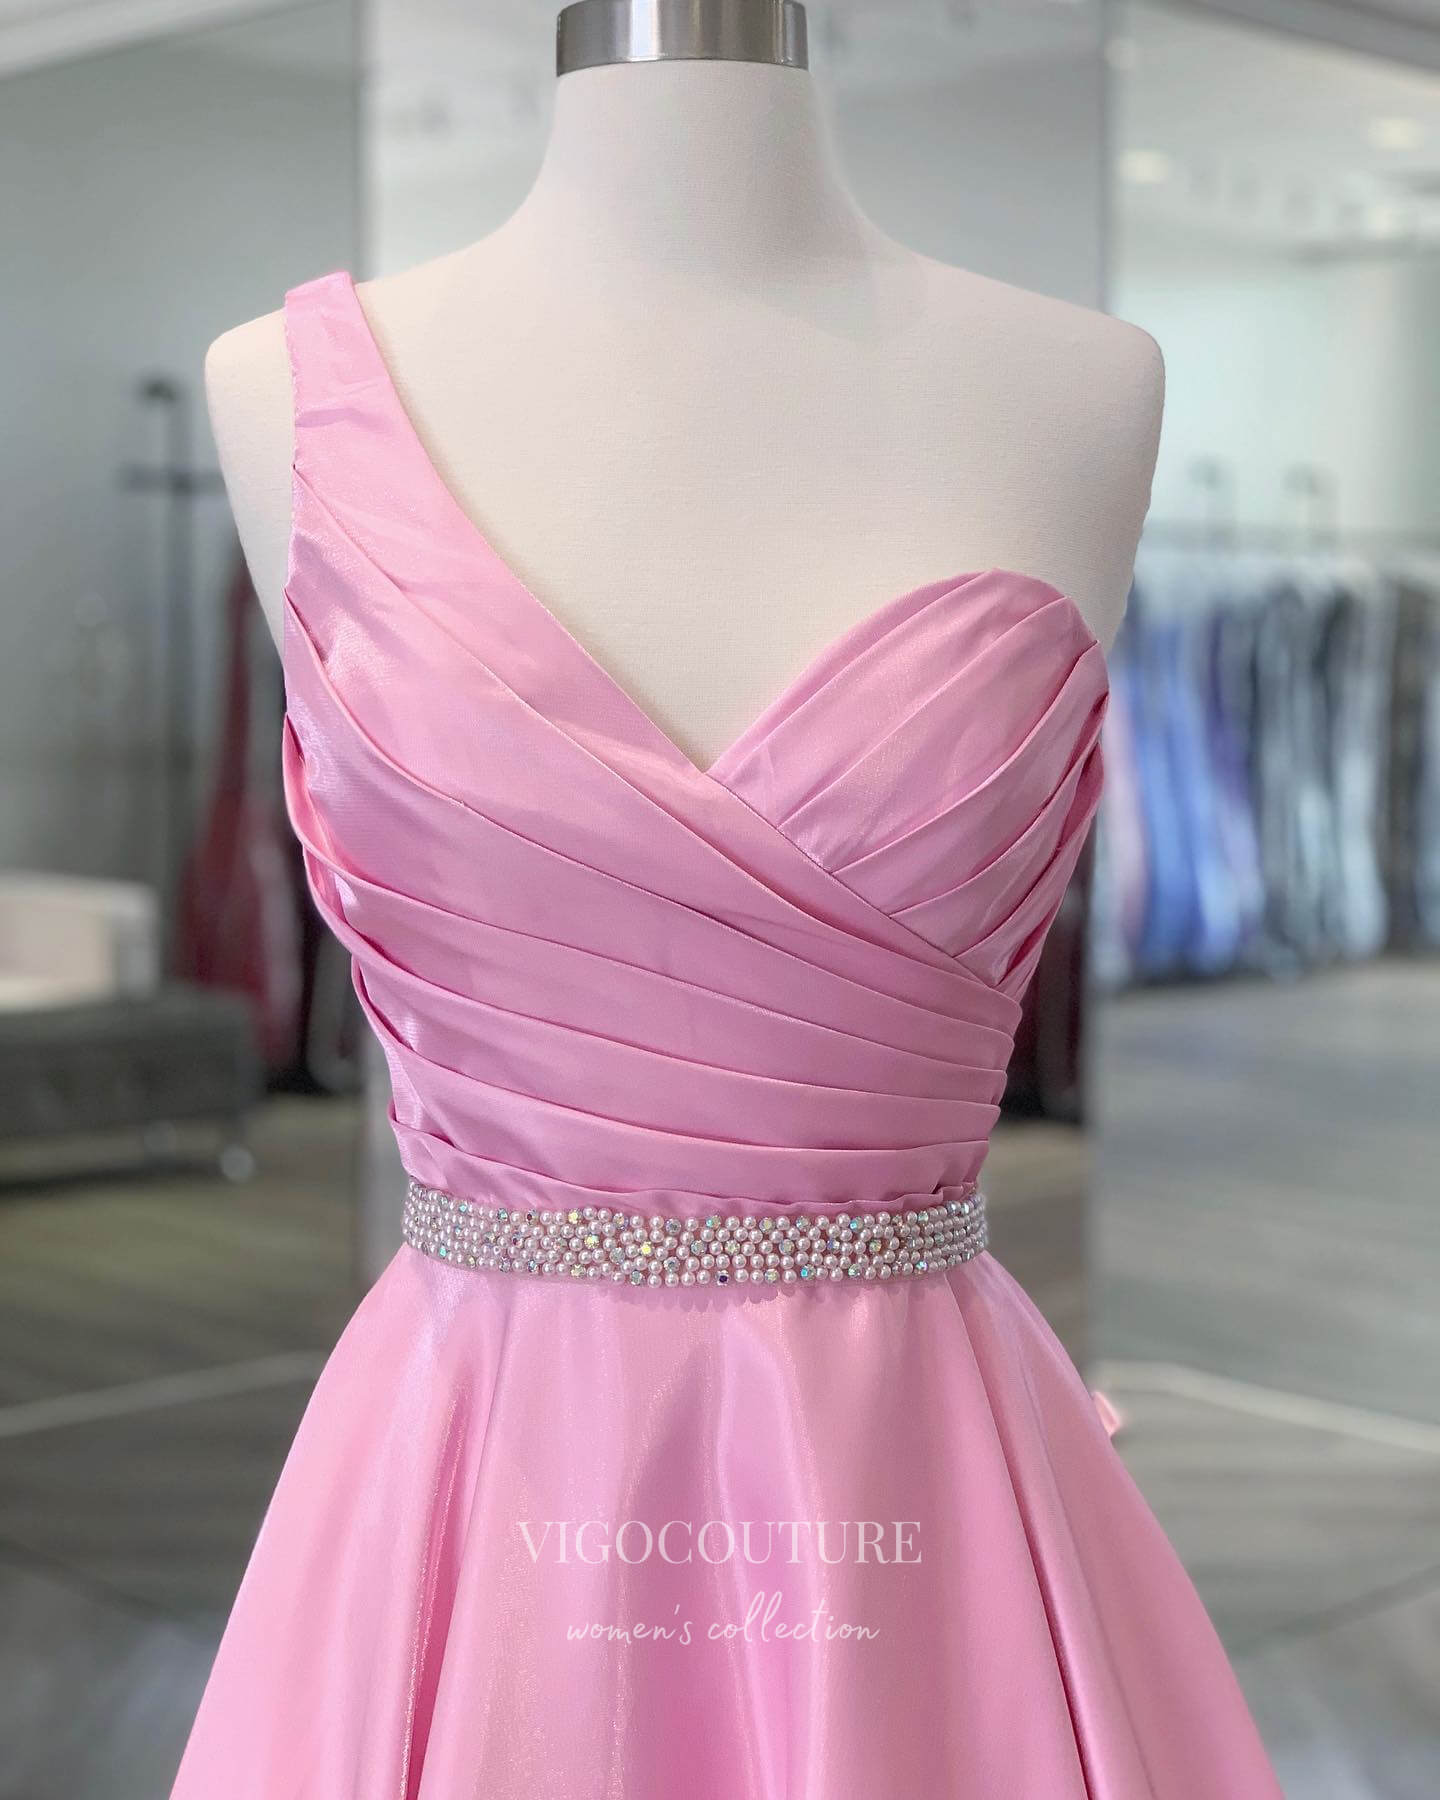 vigocouture-Pink One Shoulder Prom Dresses Pleated Satin Evening Dress 21801-Prom Dresses-vigocouture-